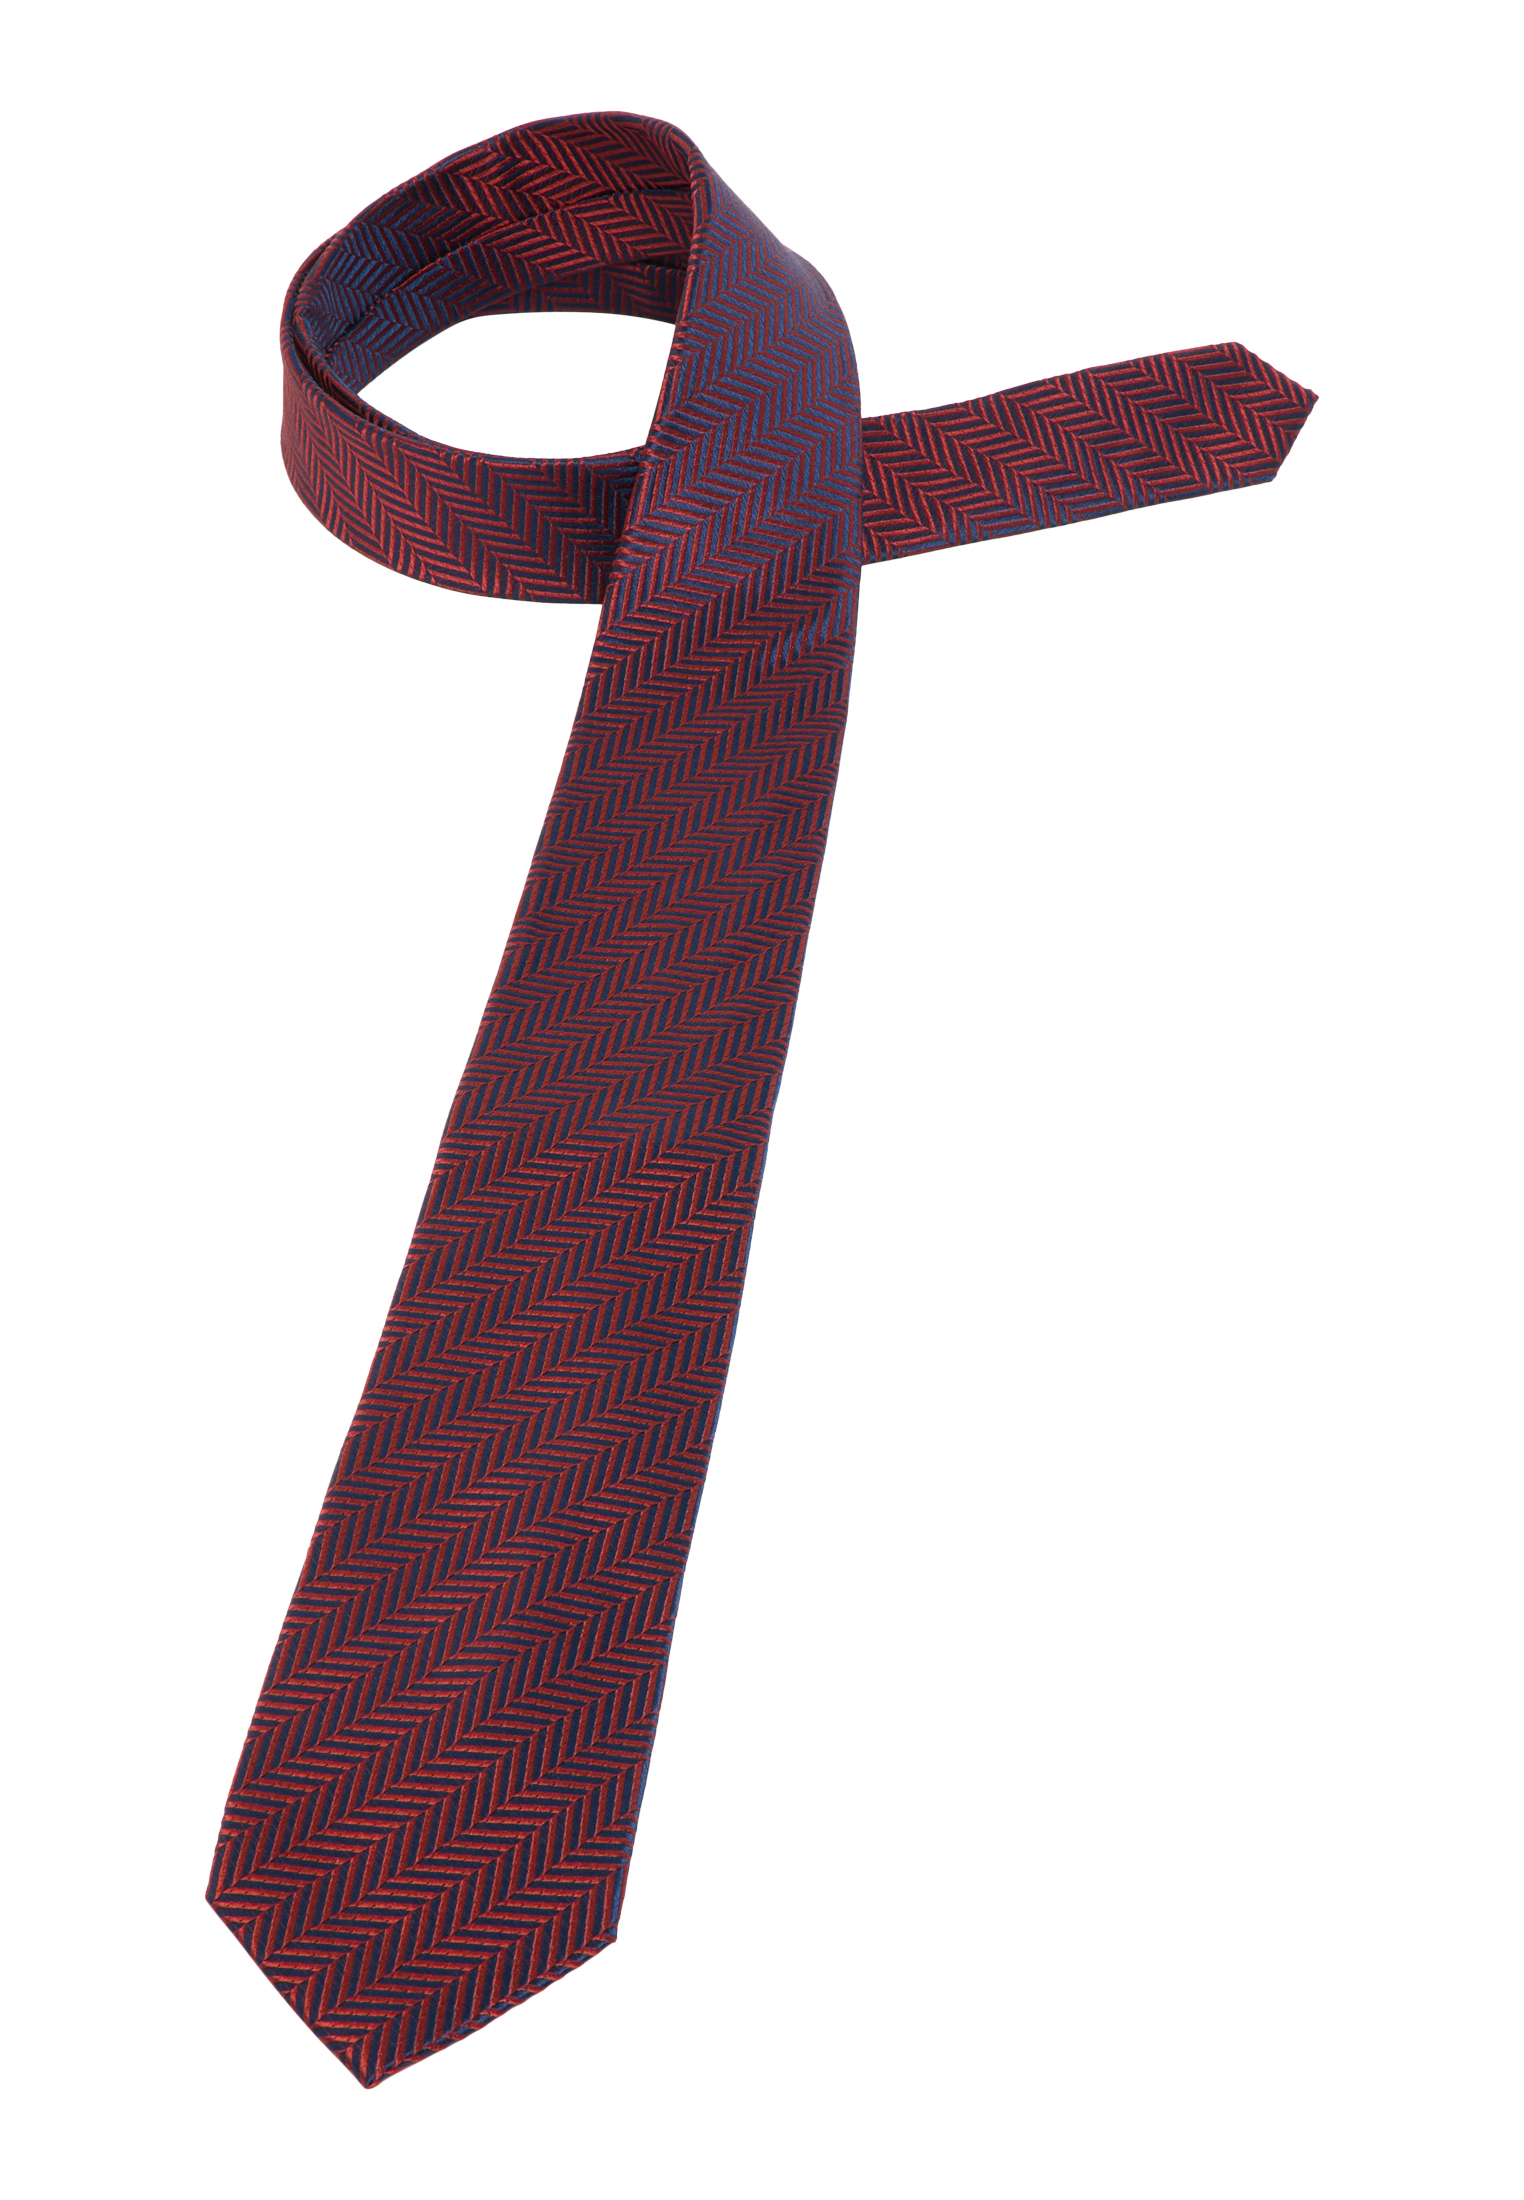 Krawatte in orange | | 1AC01911-08-01-142 gemustert 142 | orange